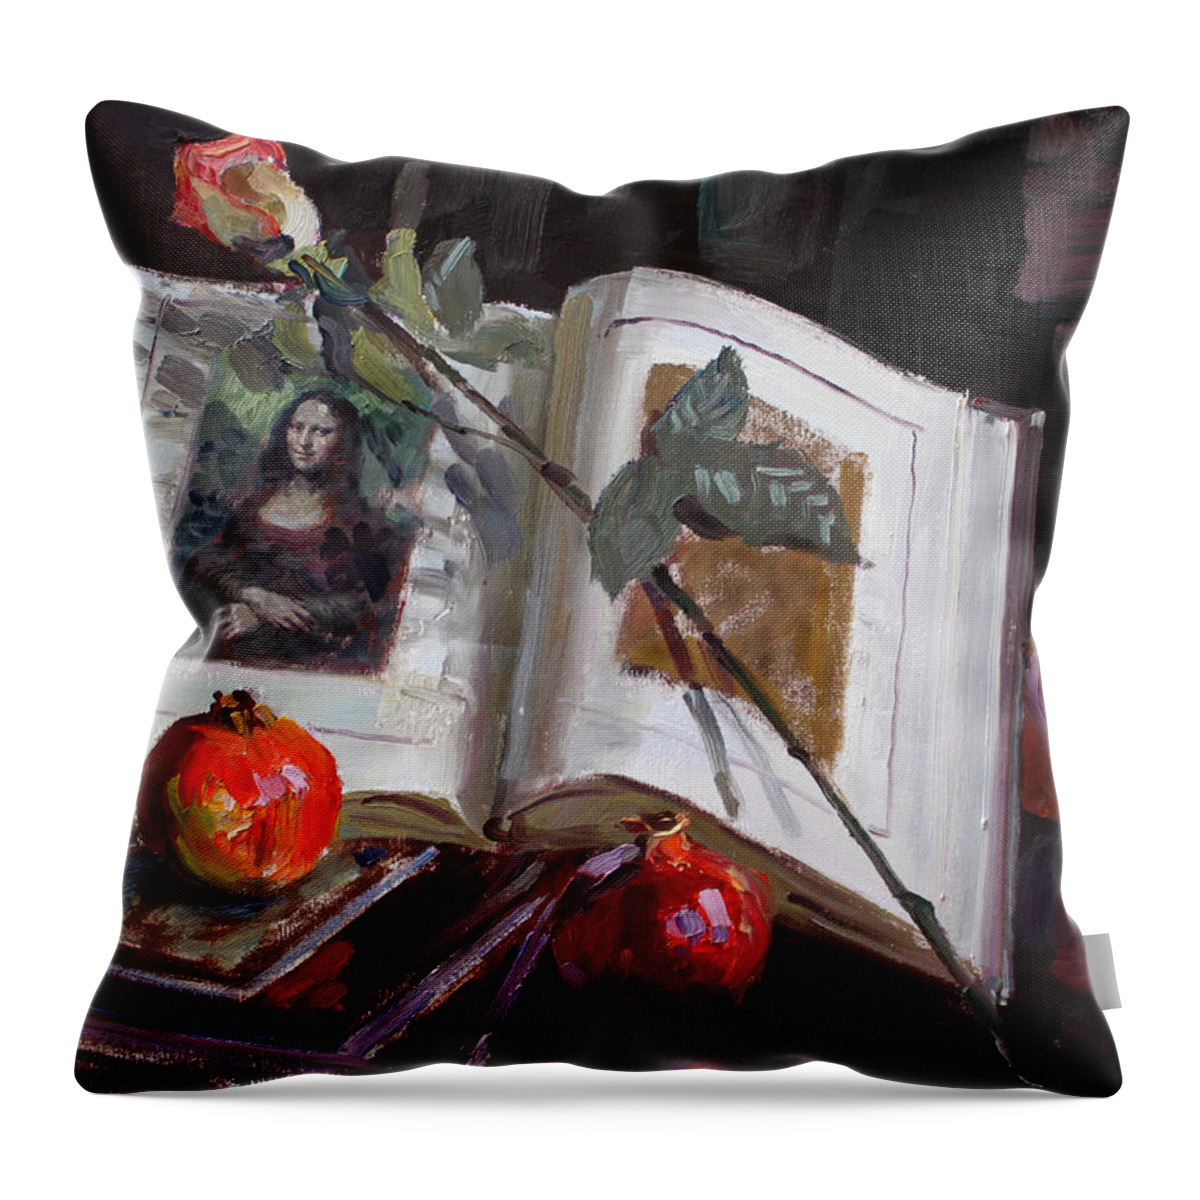 La Gioconda Throw Pillow featuring the painting La Gioconda by Ylli Haruni